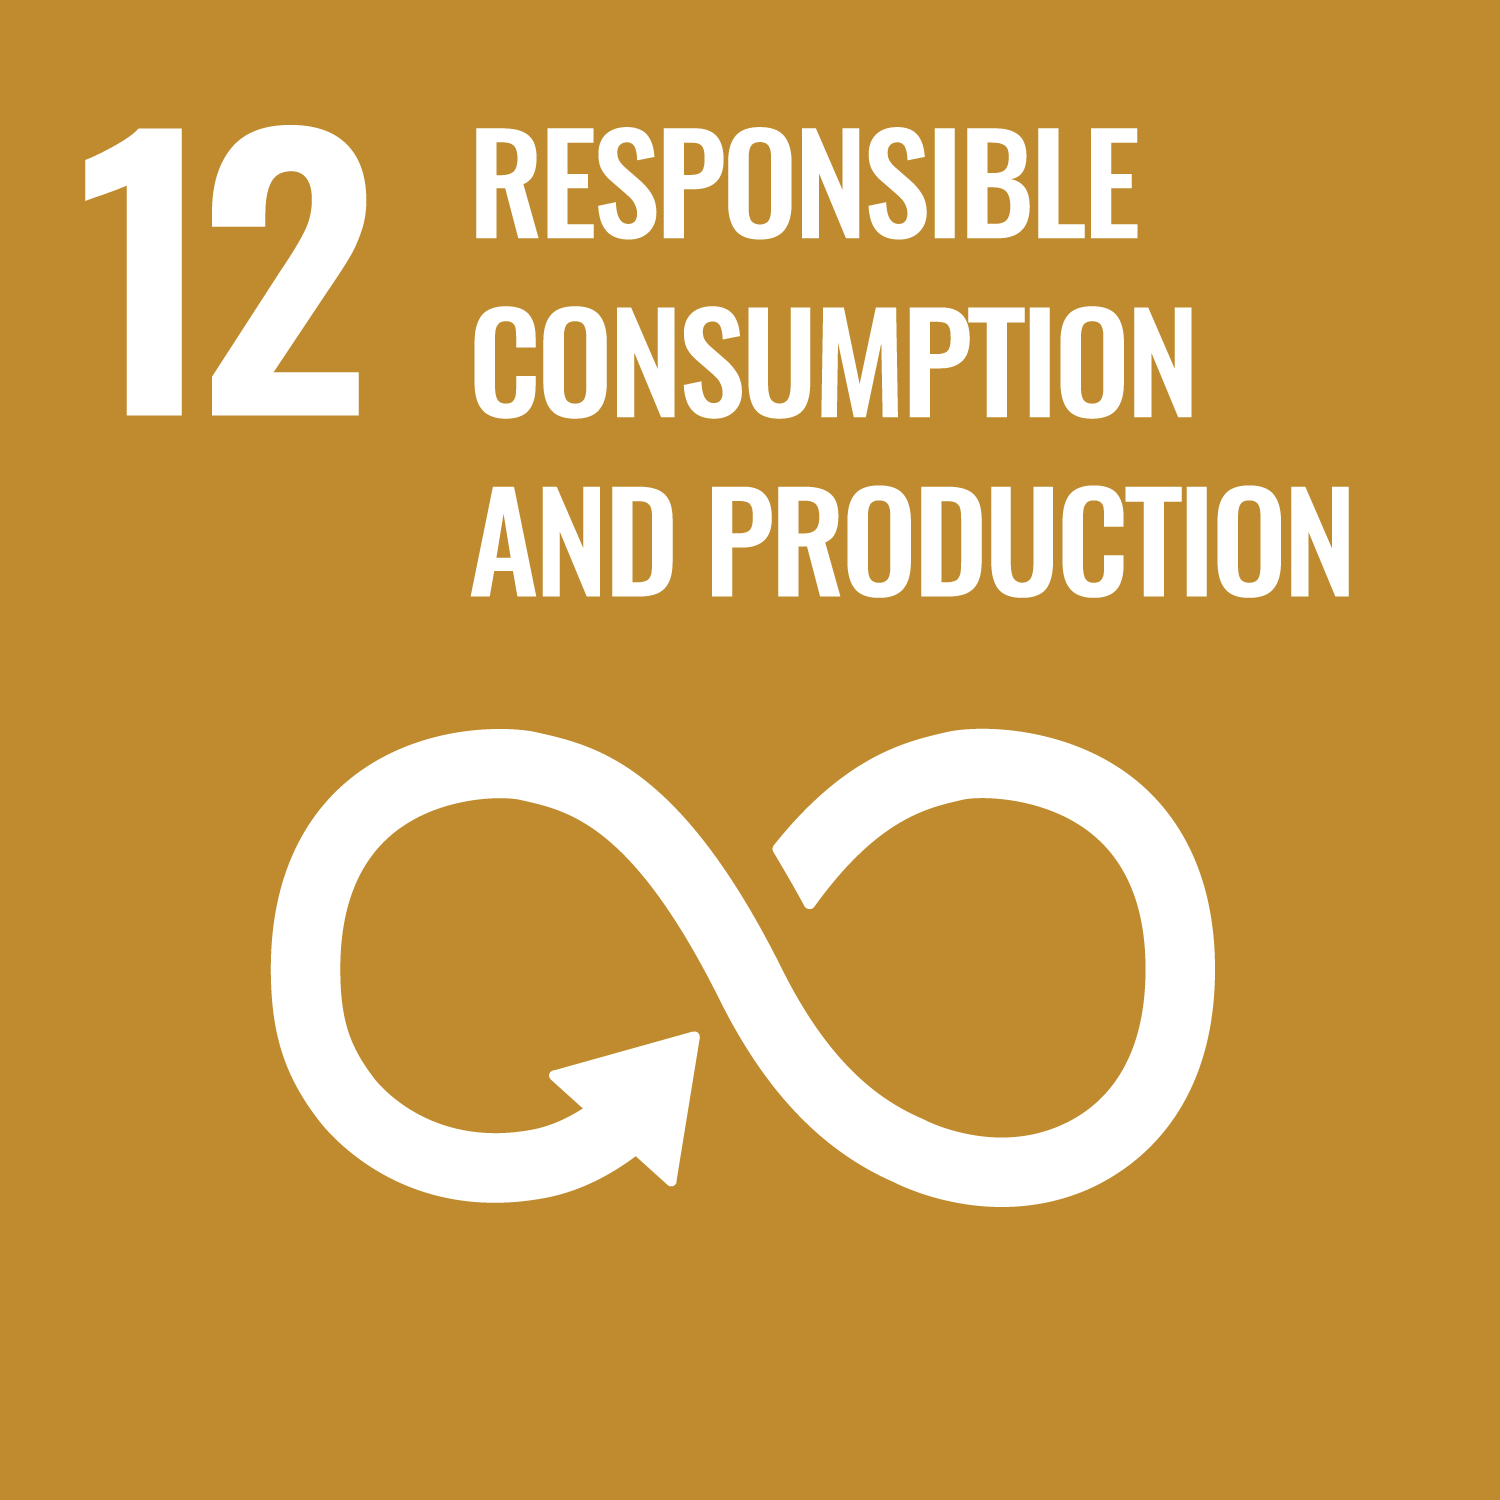 12.Responsible consumption, production